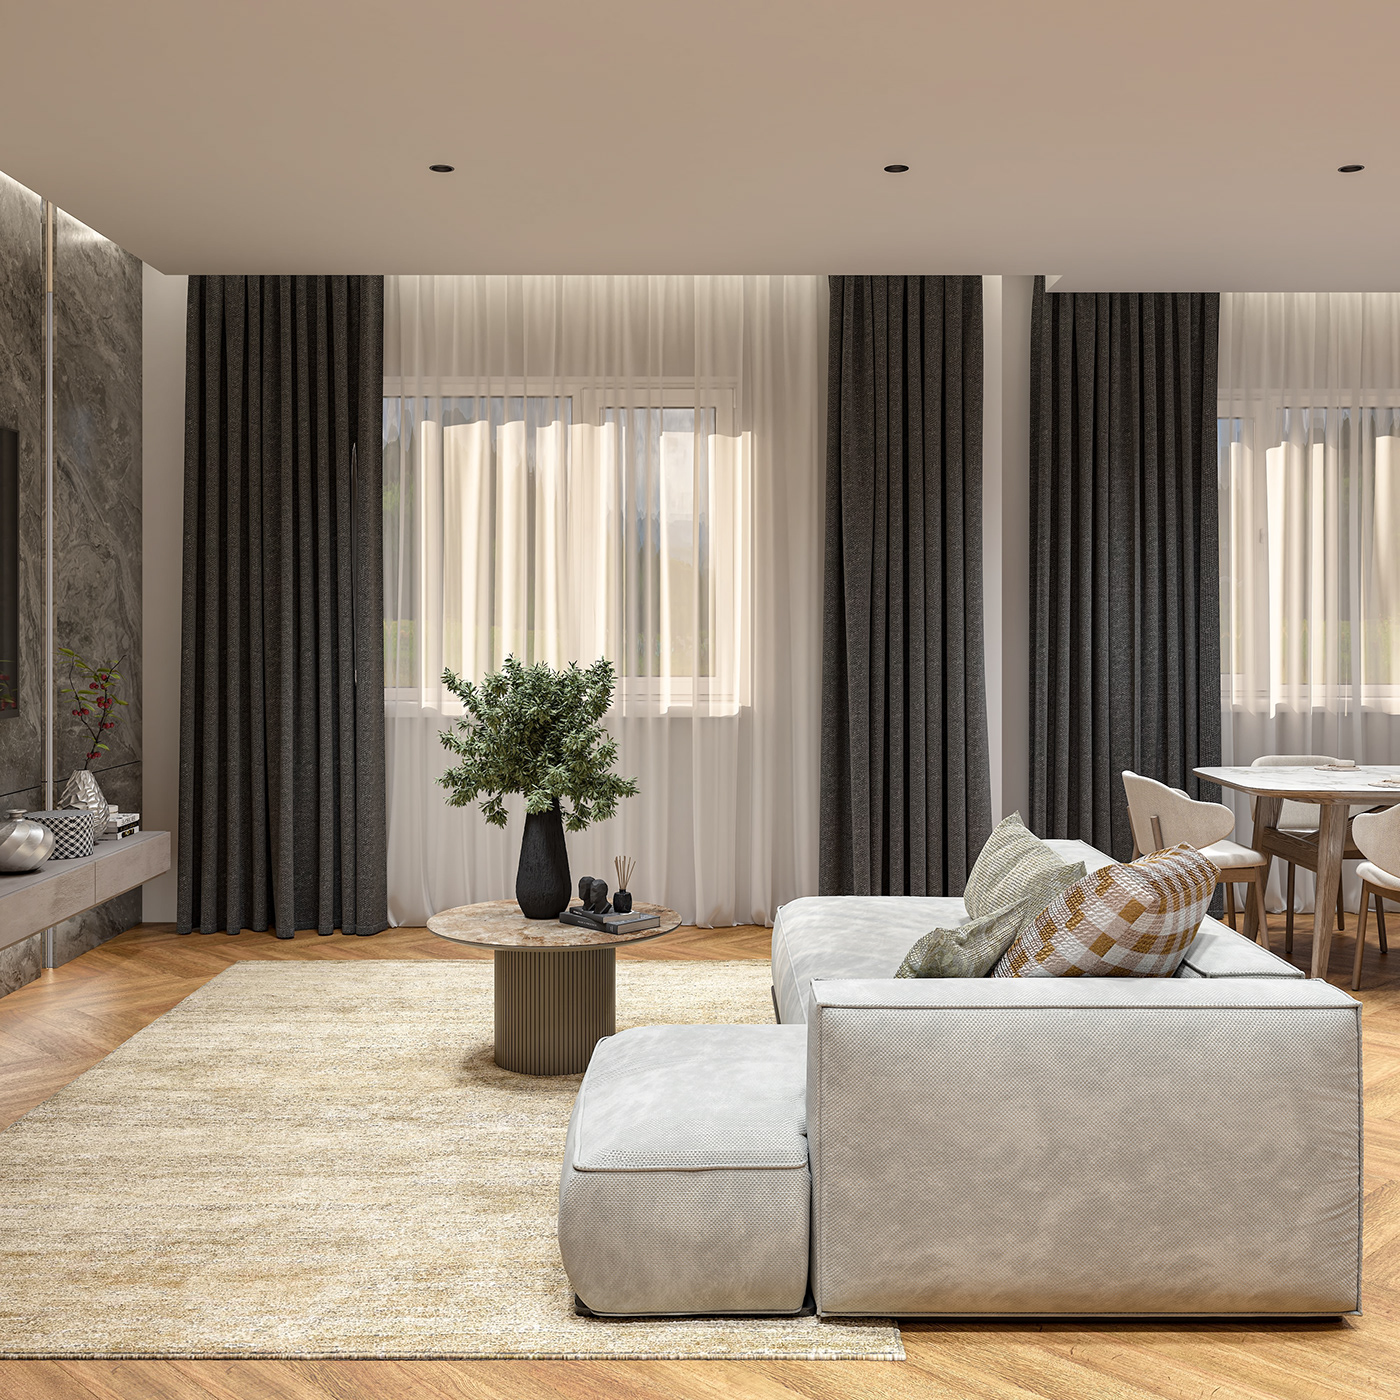 house 3D visualization 3ds max vray interior design  Render corona architecture modern